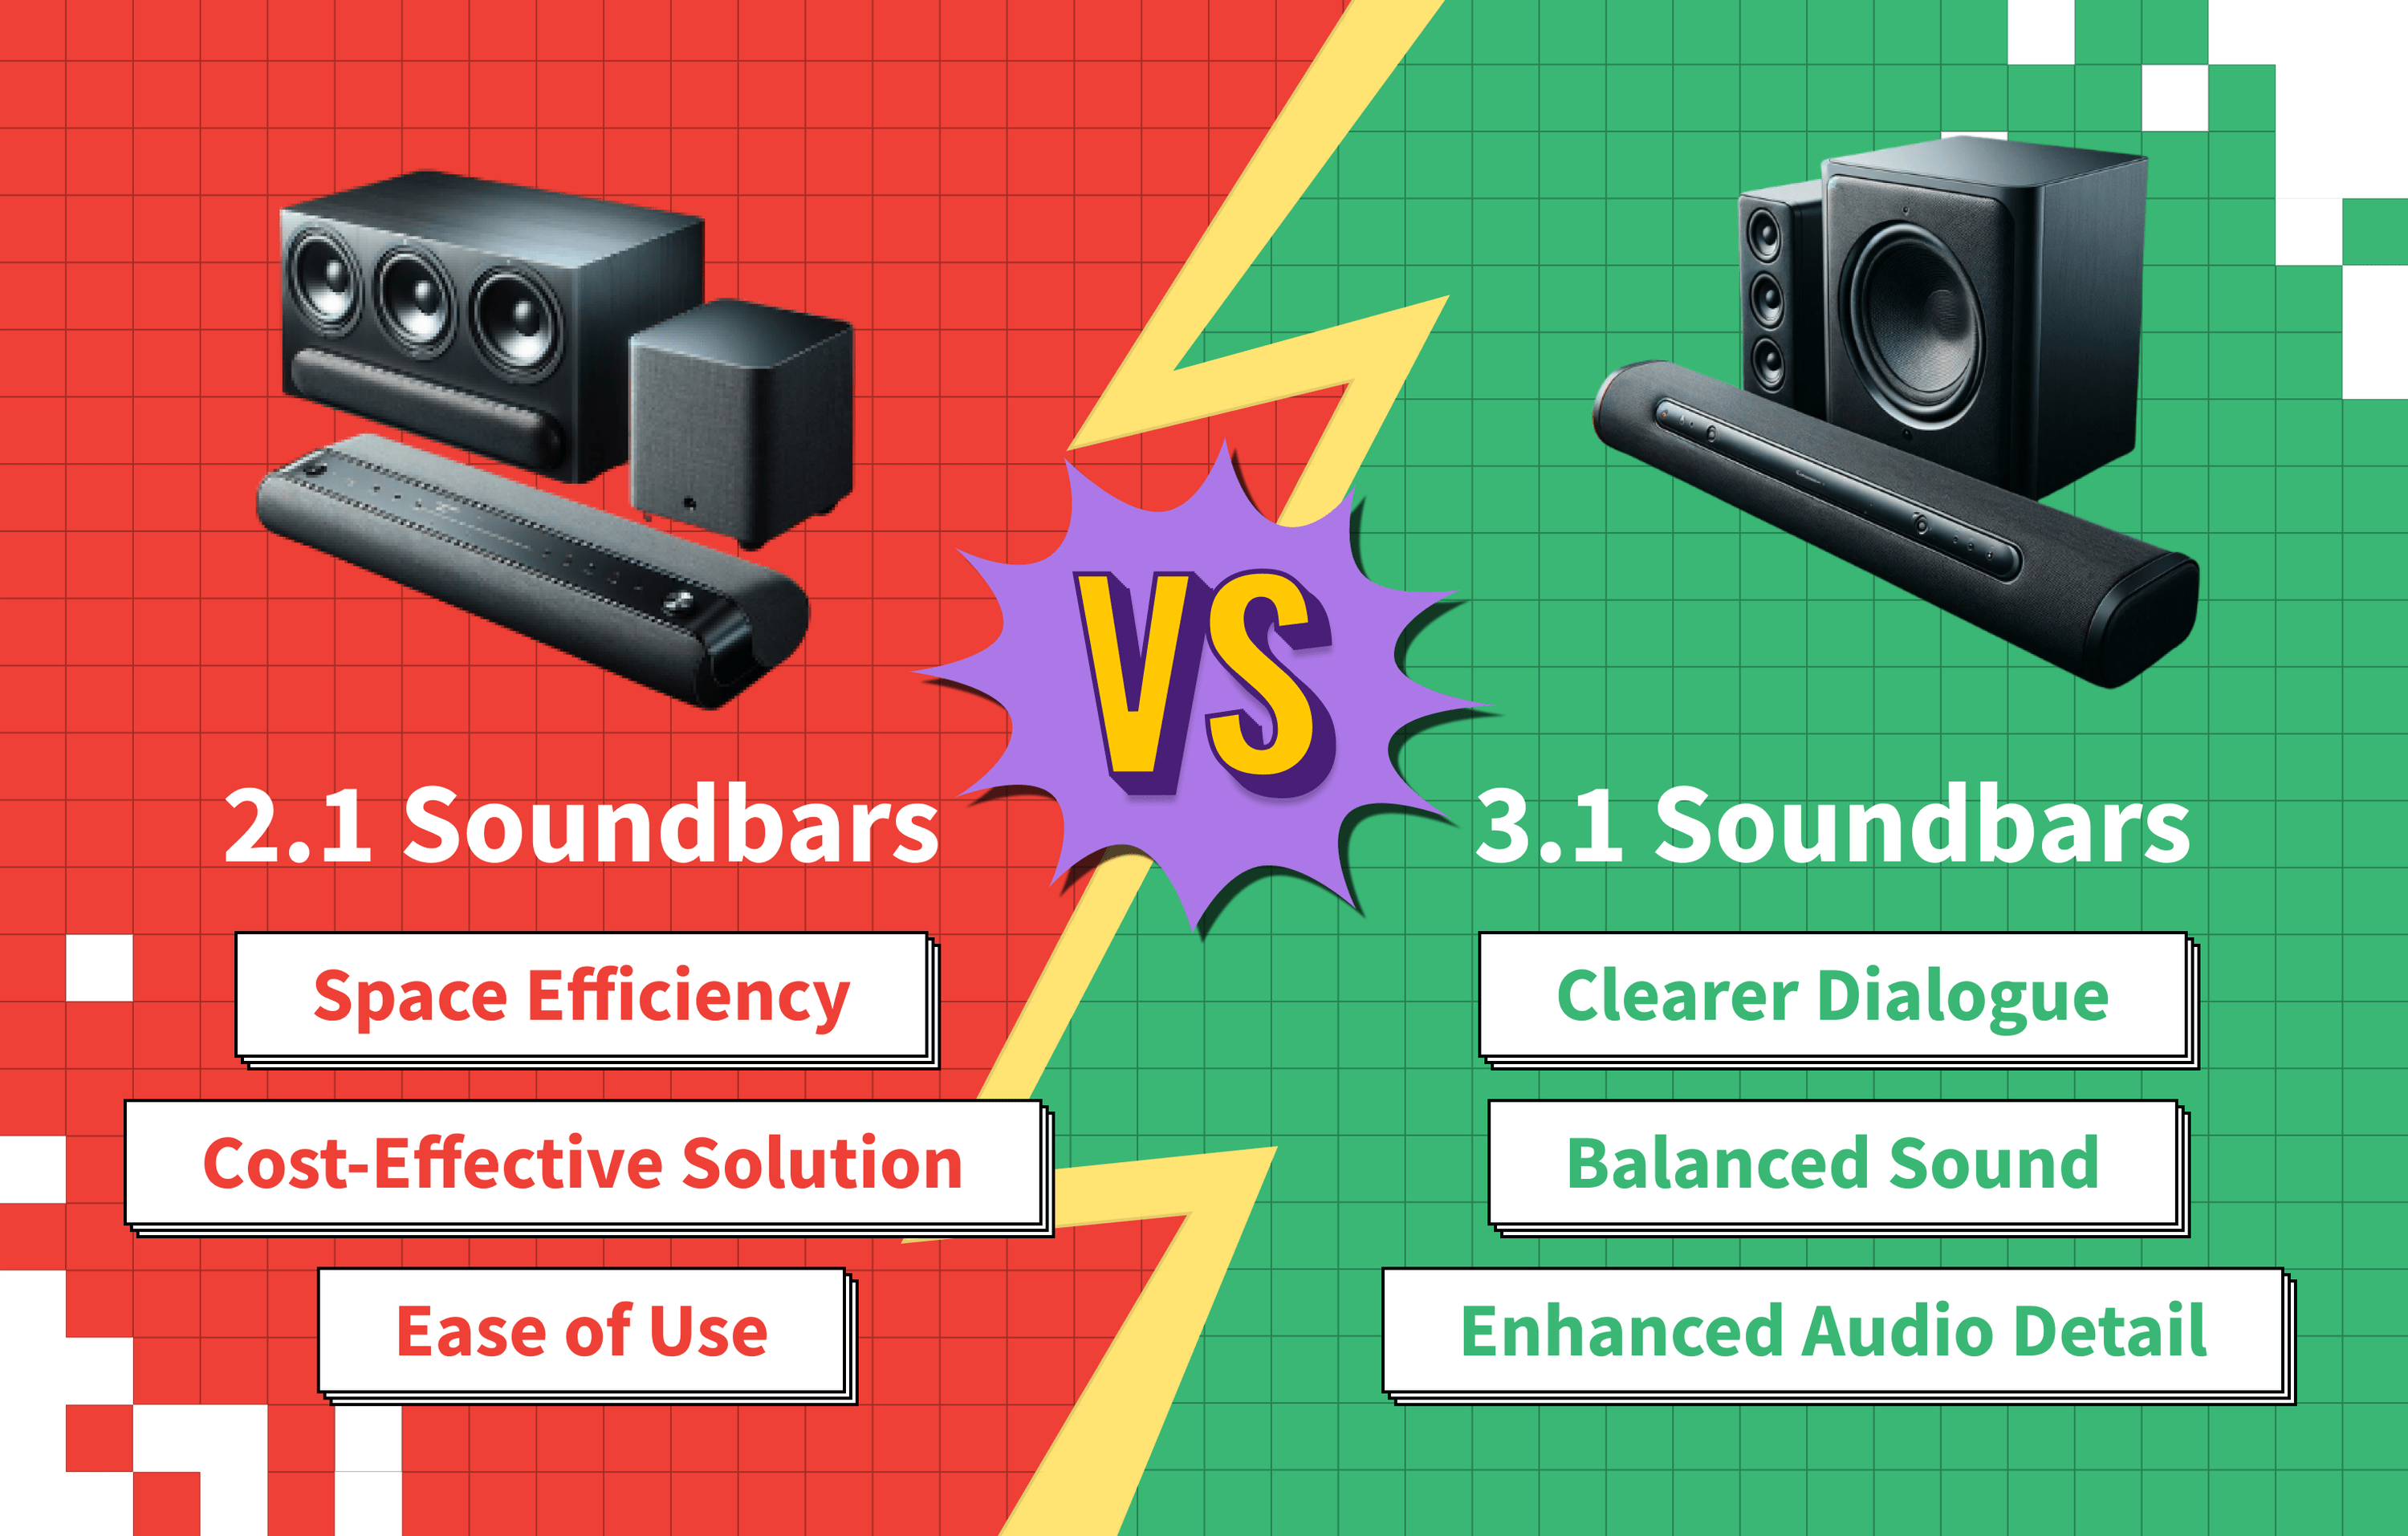 2.1 vs 3.1 Soundbars